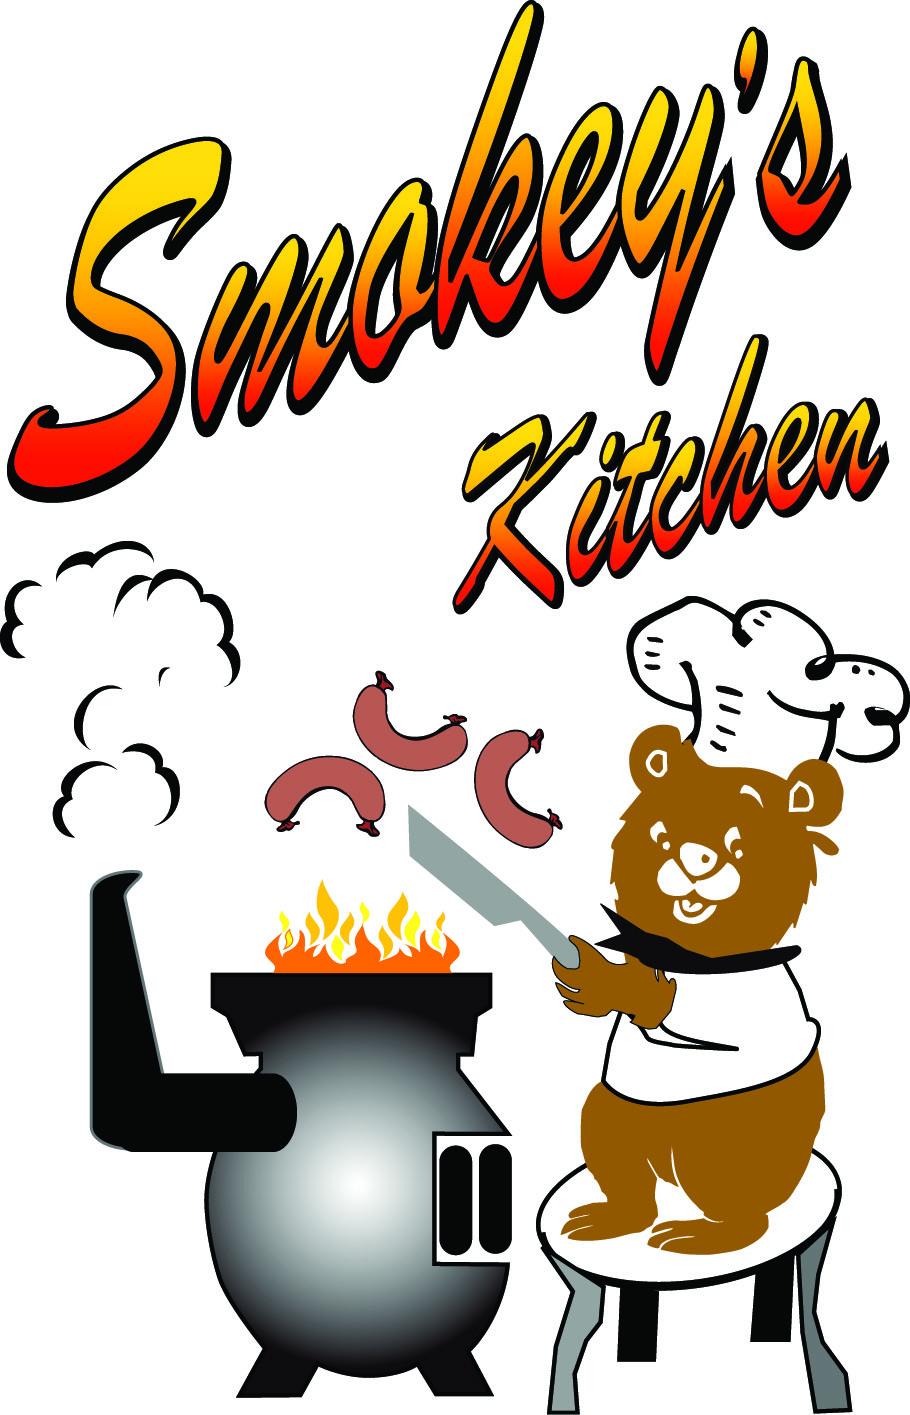 Smokey's Kitchen & Catering